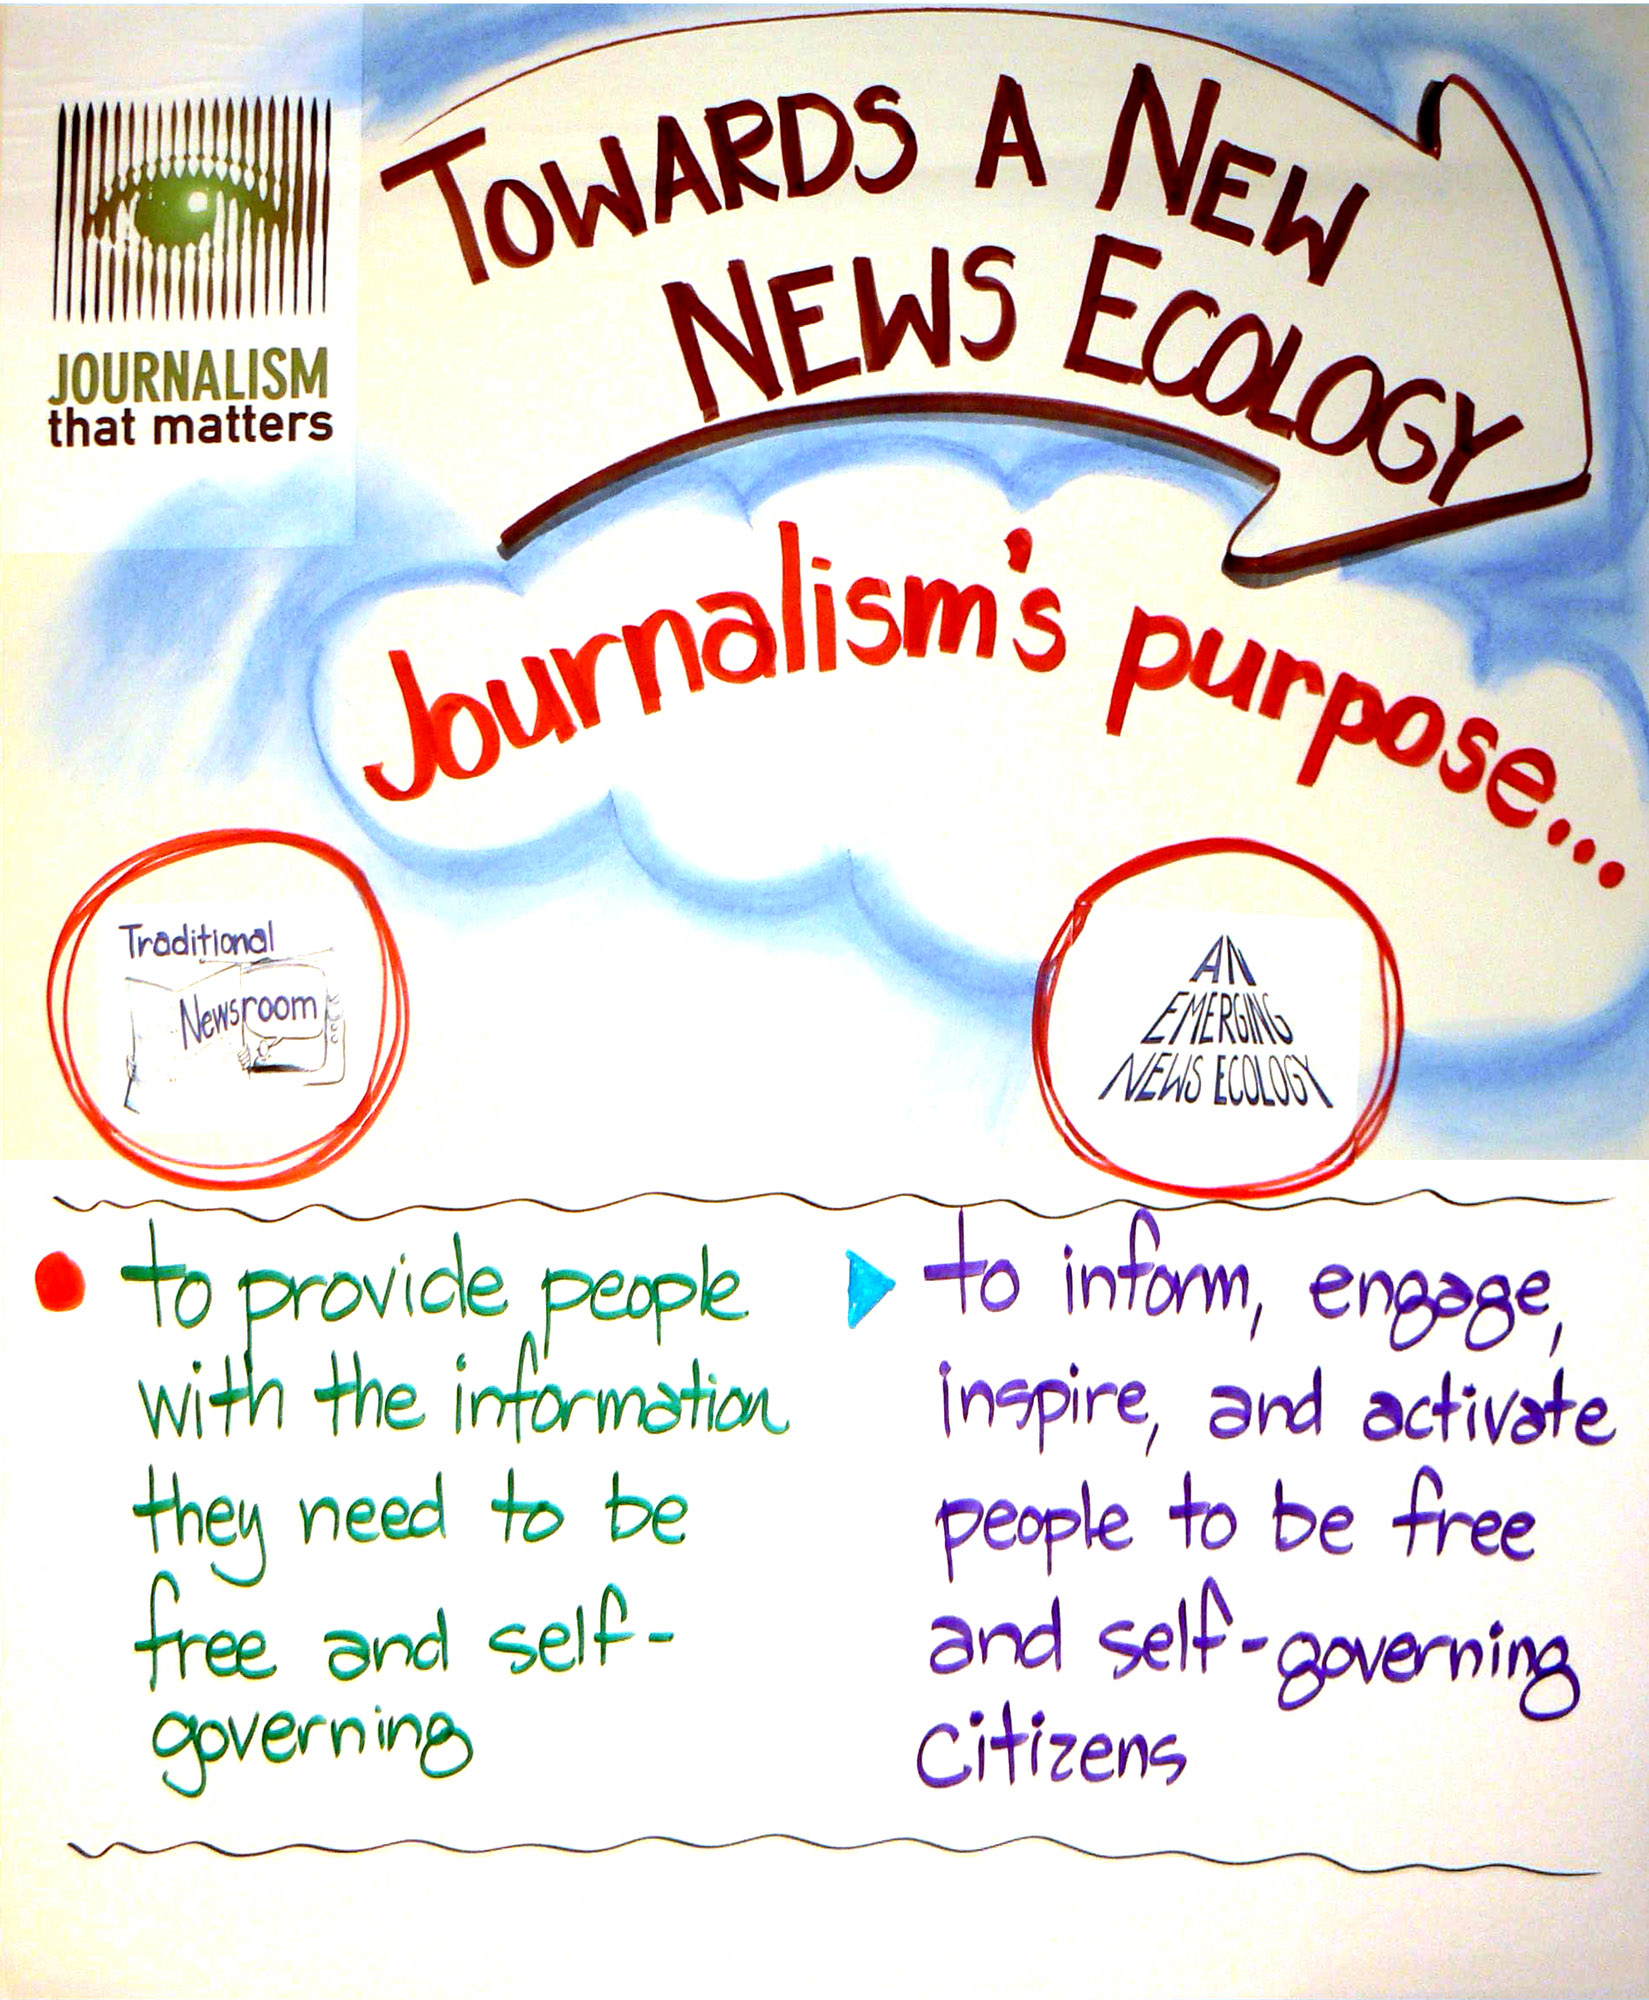 NewsEco-Journalism-purpose_med_res.jpg